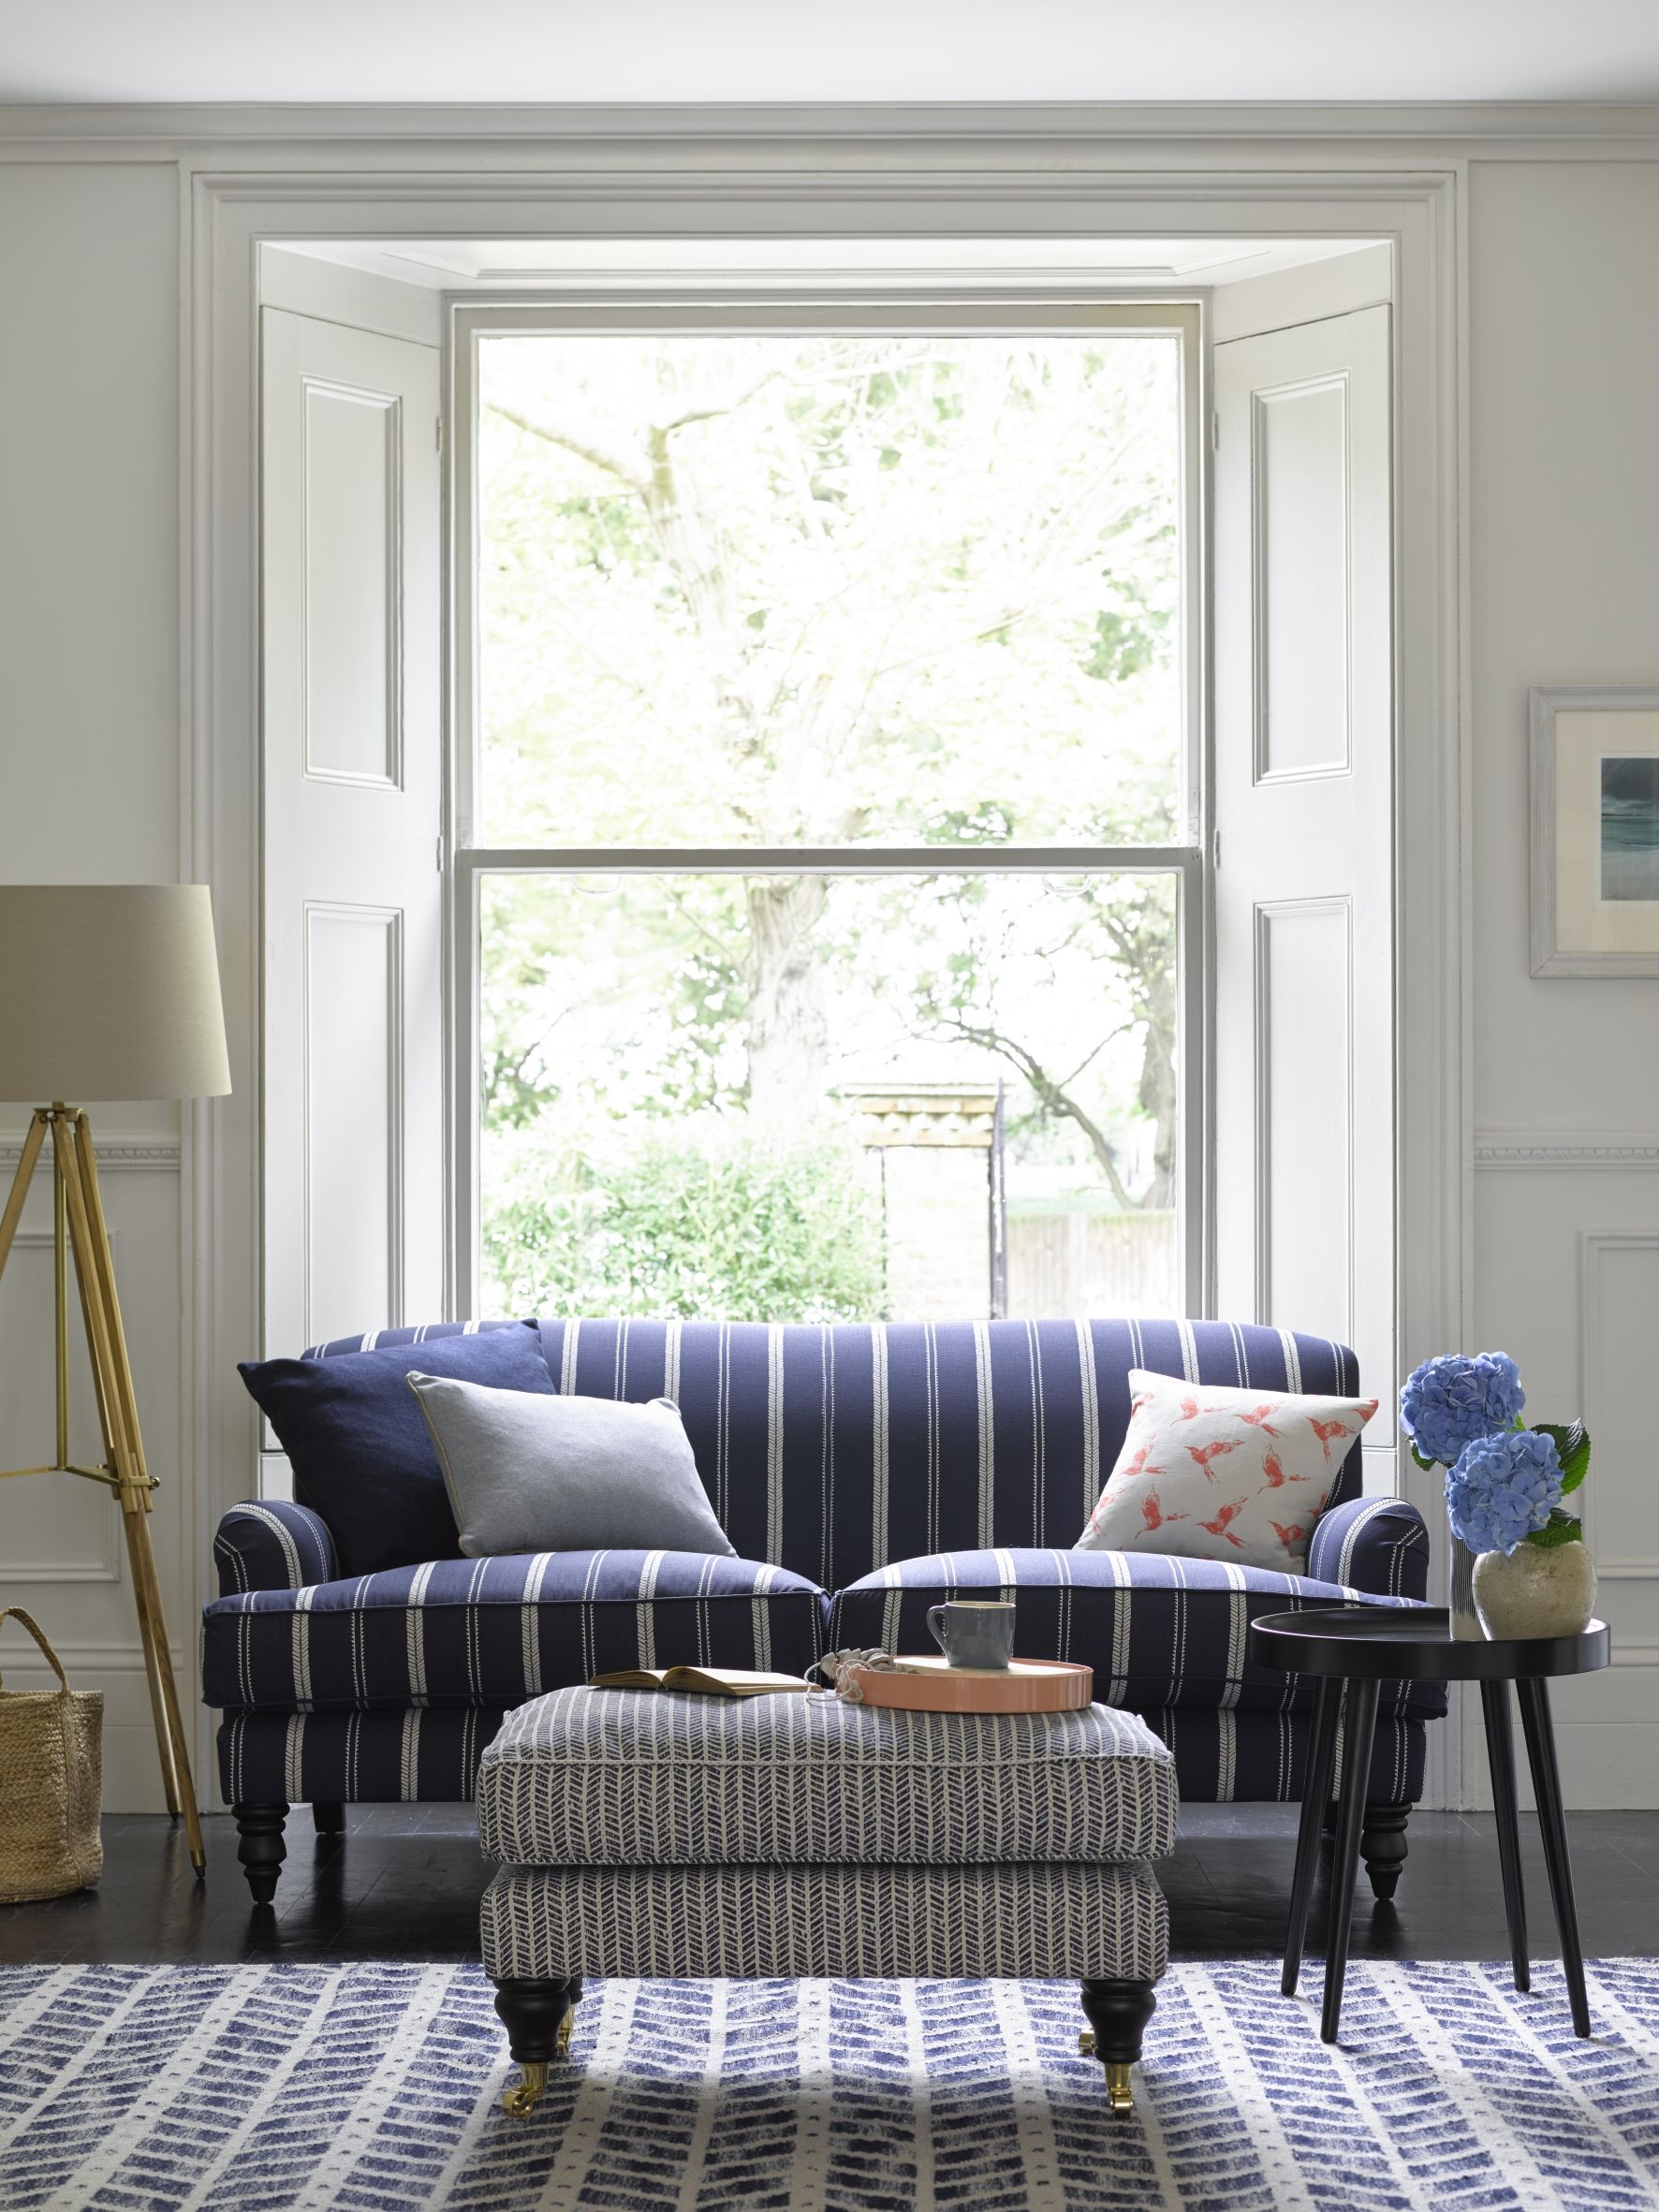 Get Choosing Living Room Furniture Images